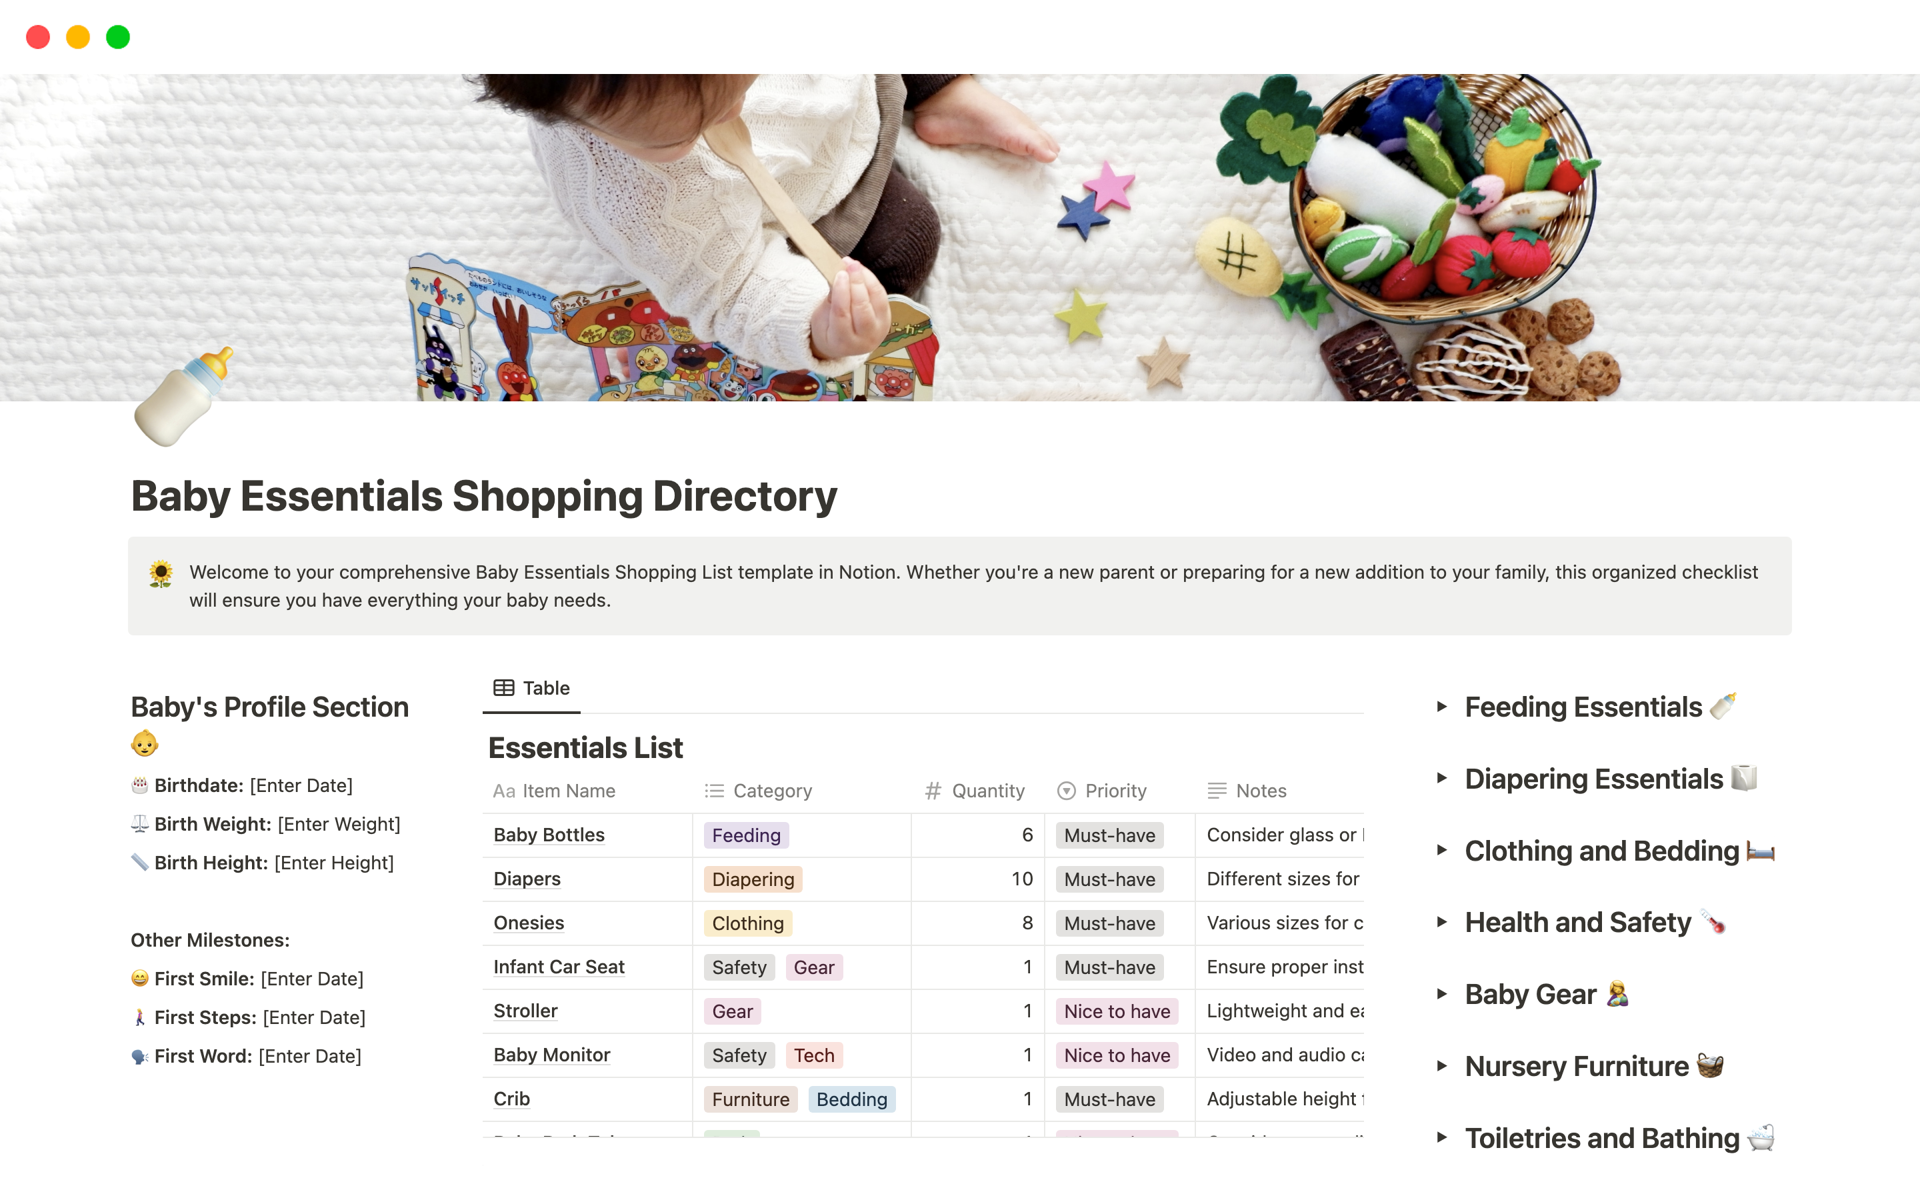 Aperçu du modèle de Baby Essentials Shopping Directory